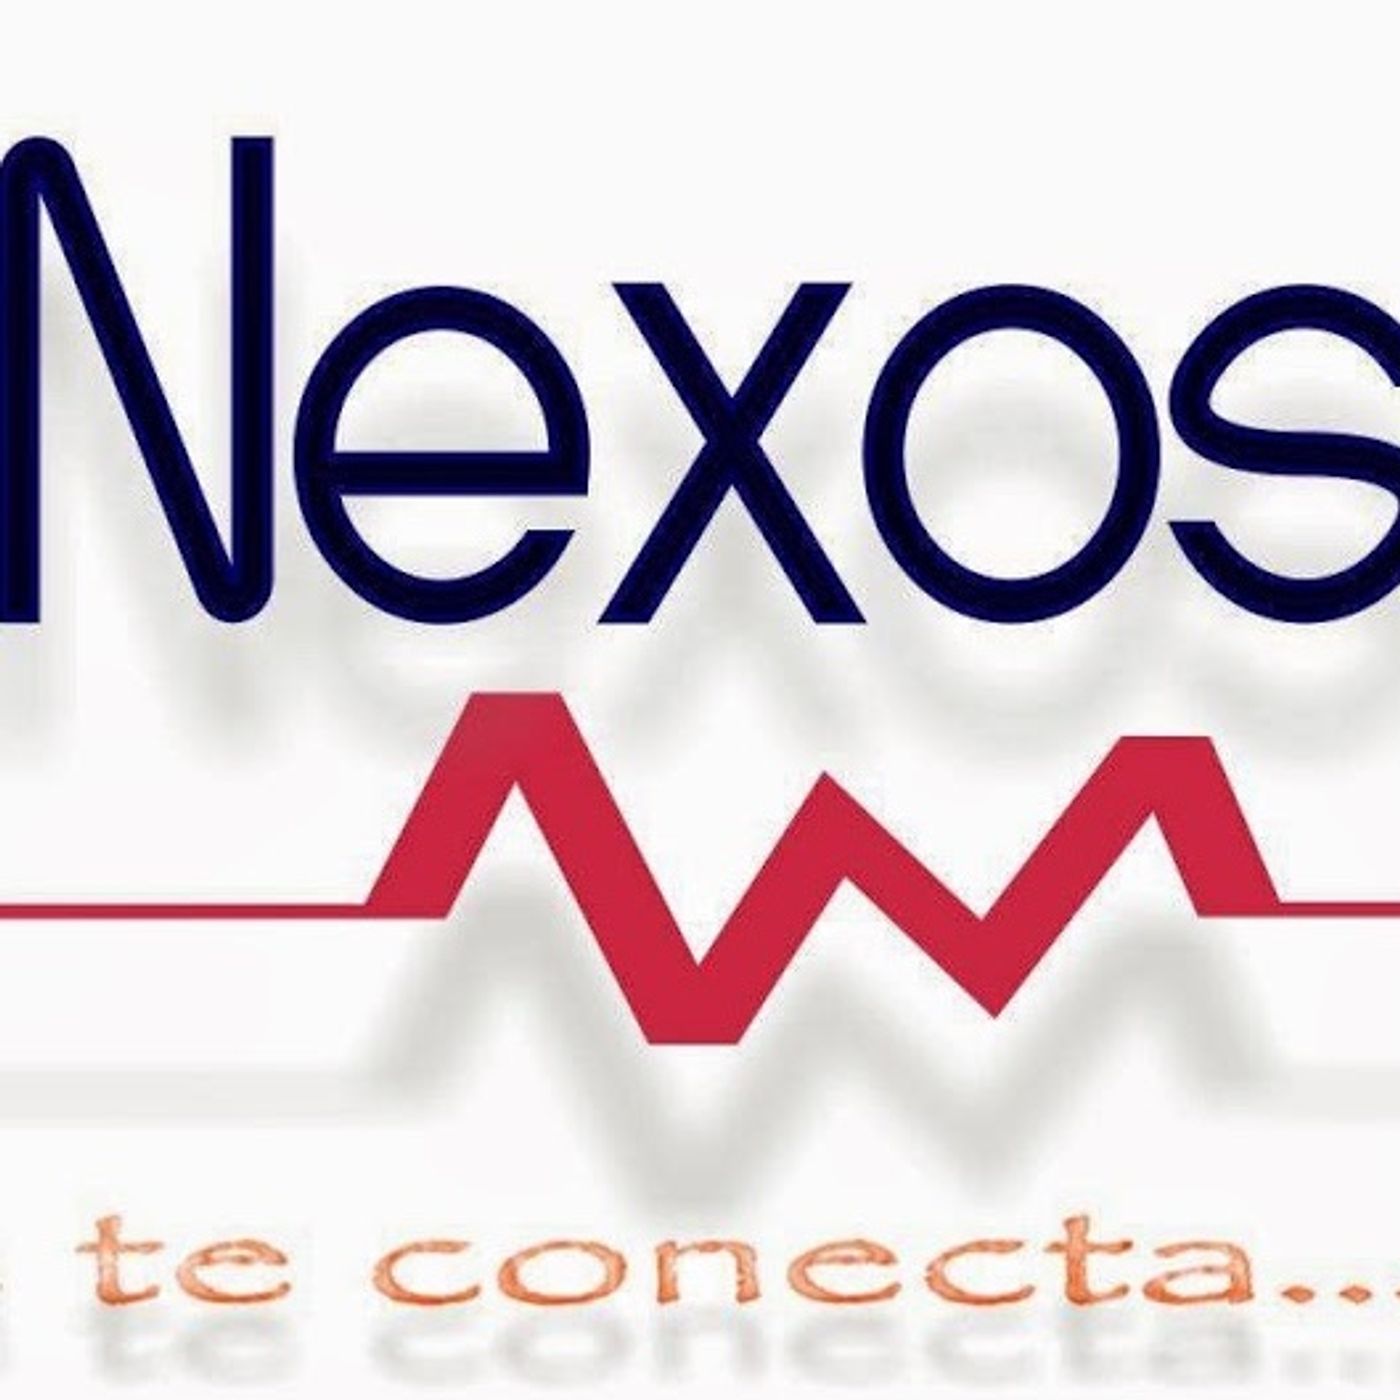 Radio'Nexos's tracks